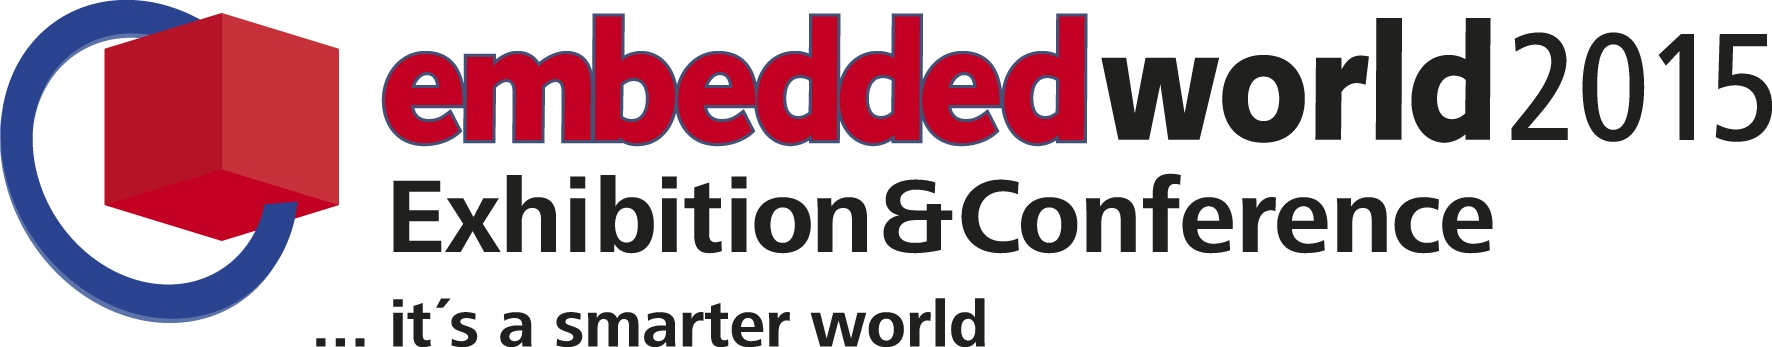 embedded world 2015-